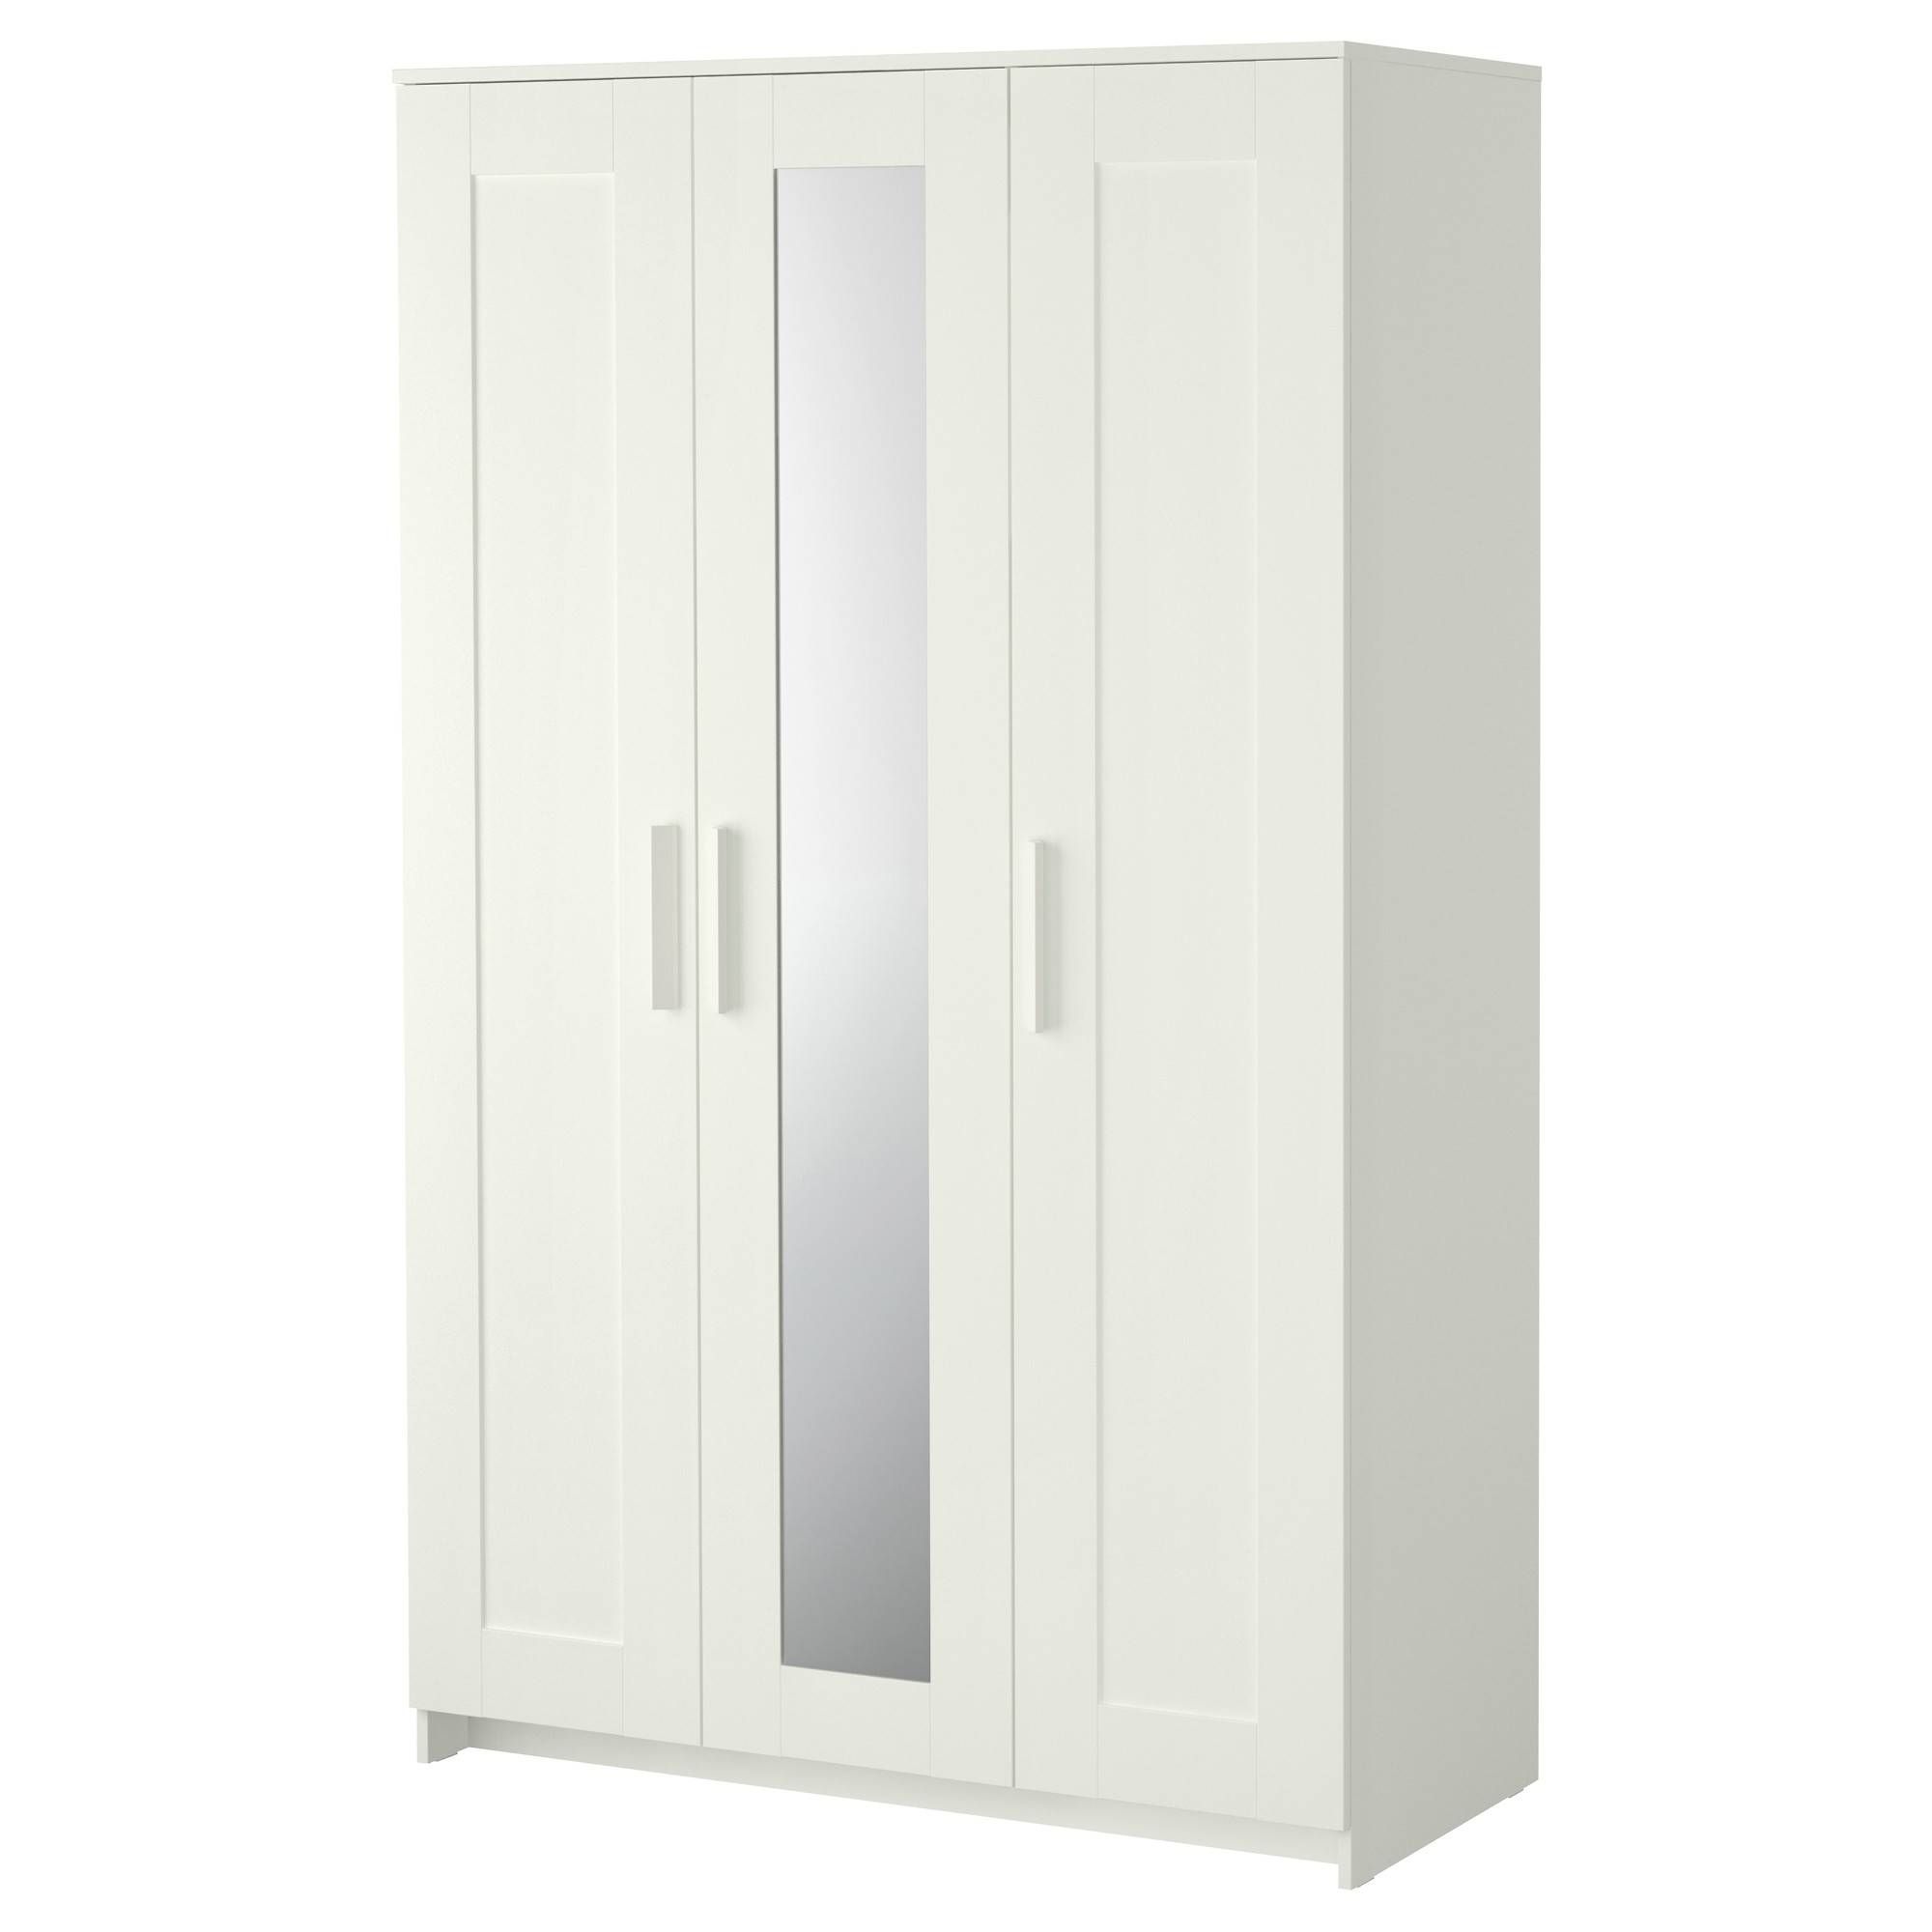 Brimnes Wardrobe With 3 Doors – White – Ikea Regarding White 3 Door Wardrobes (View 4 of 15)